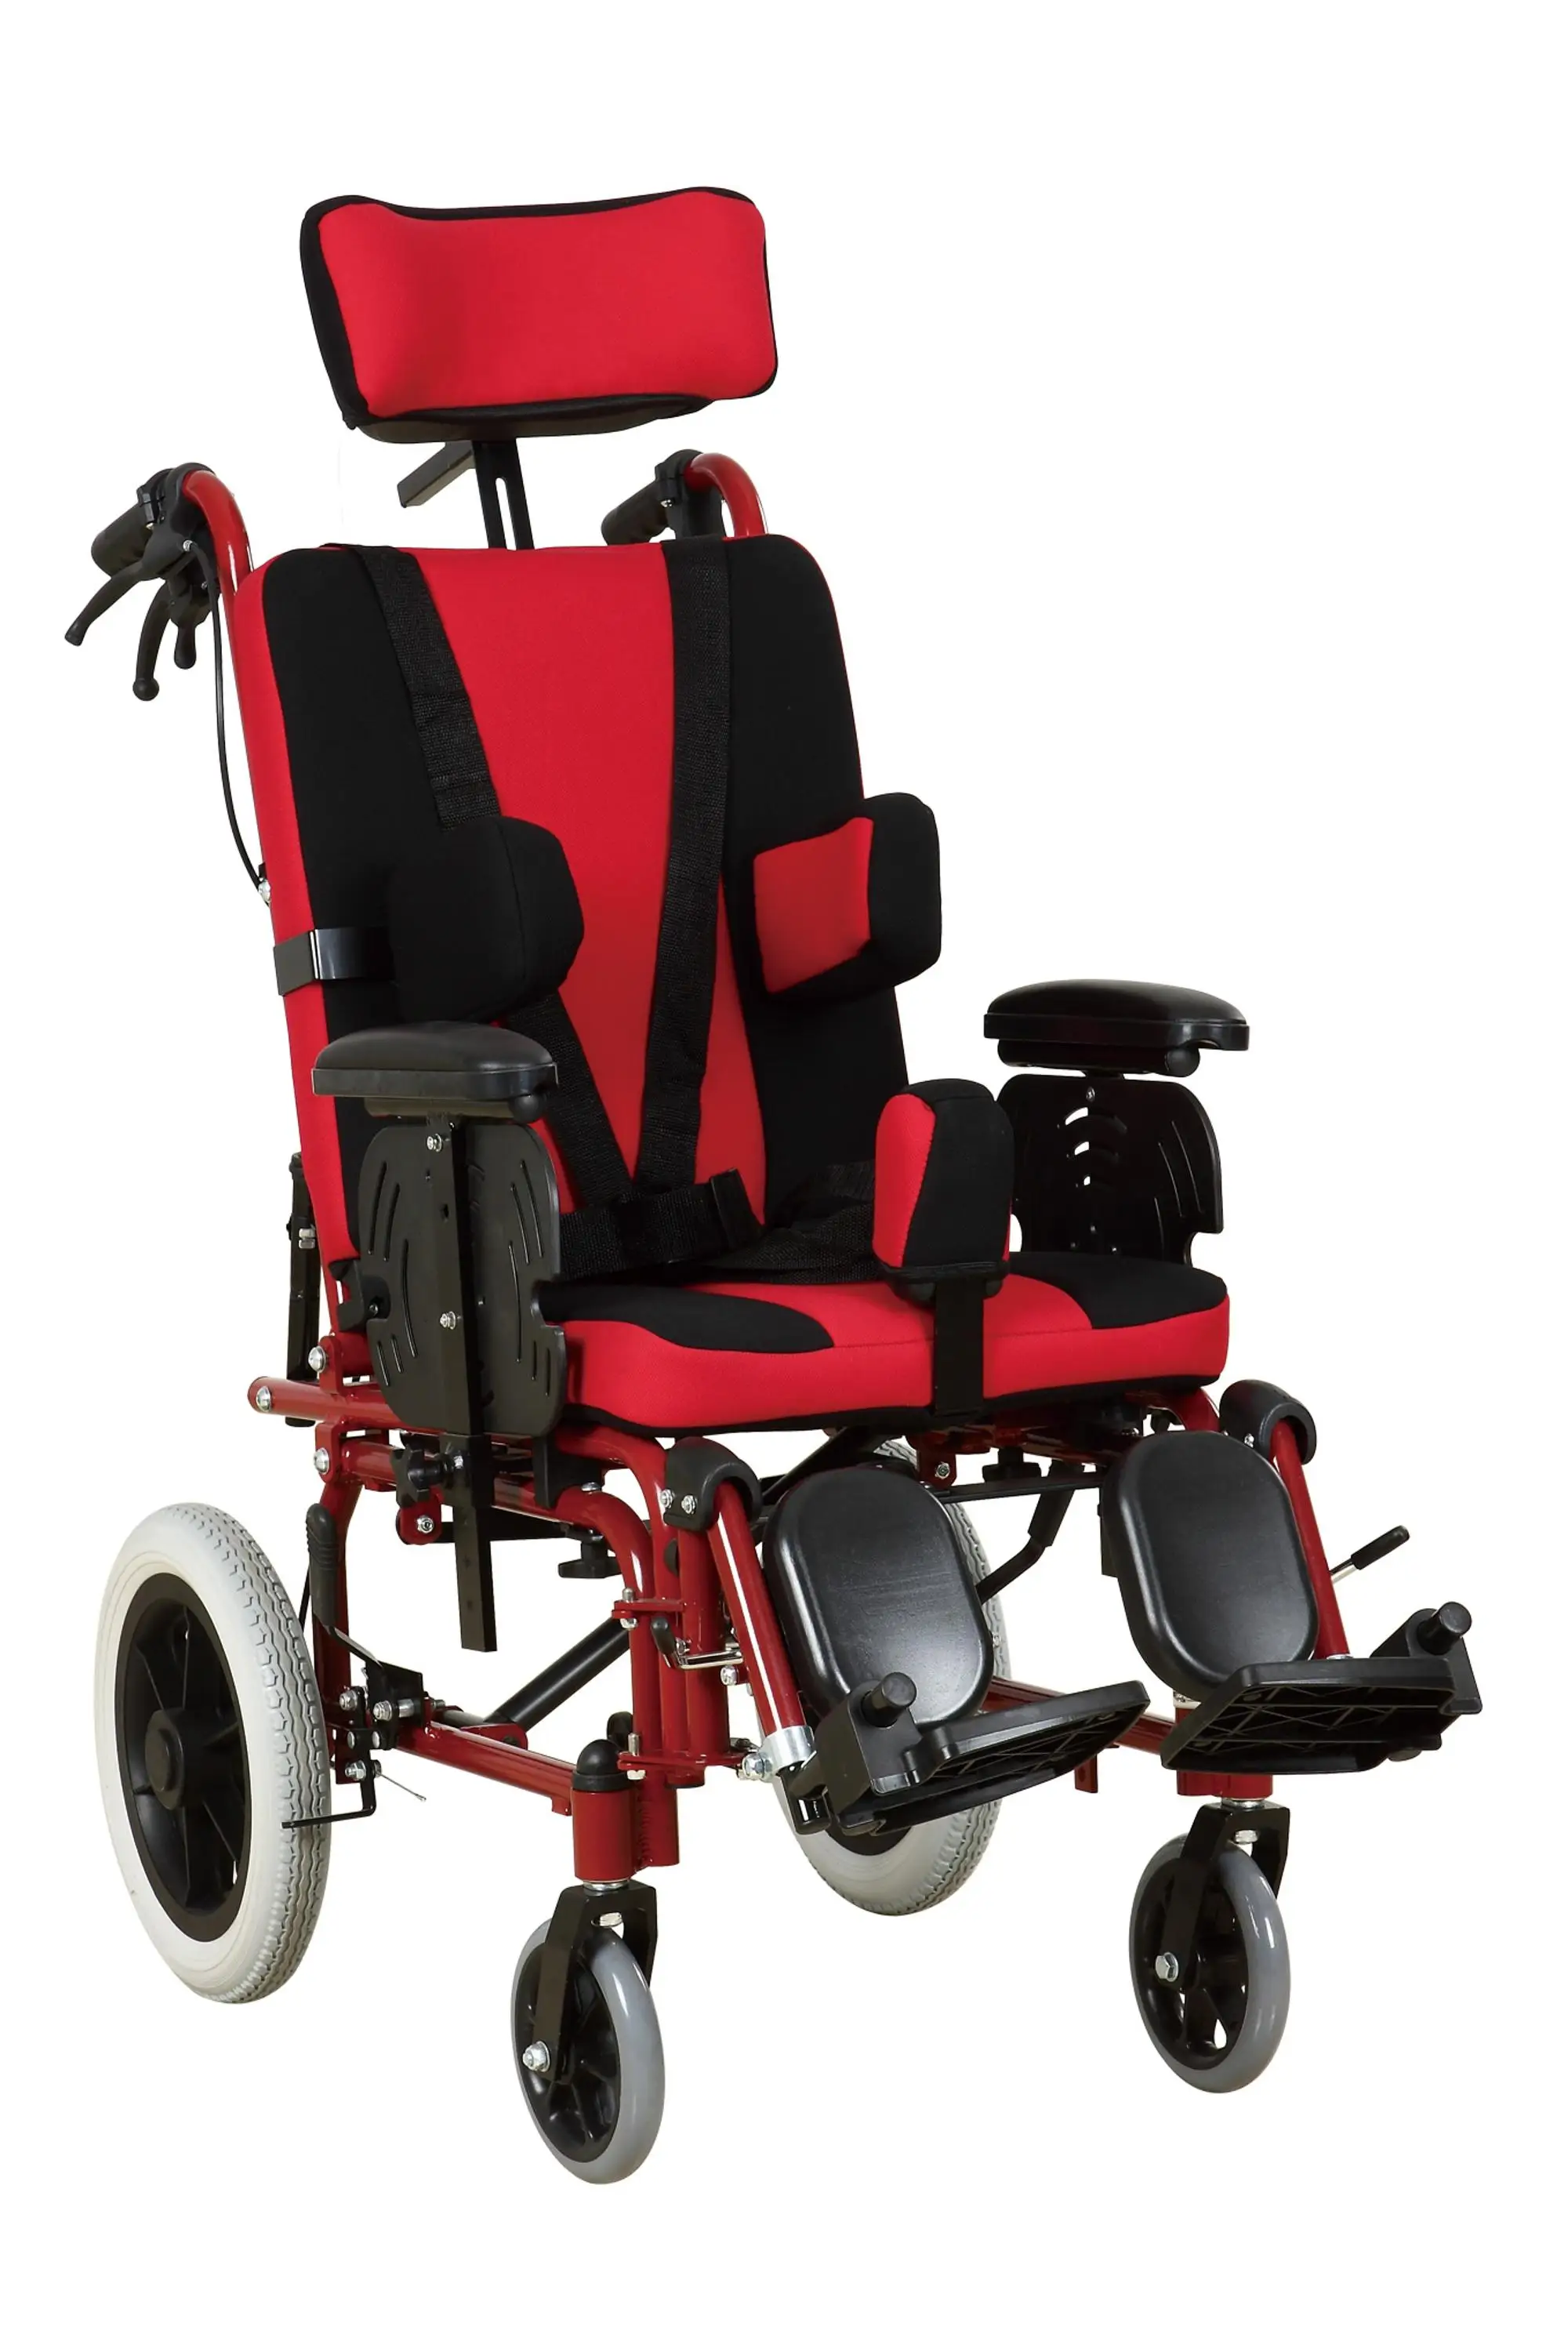 Стул для дцп. Мобилити адванс коляска для ДЦП. Адаптивный матрас в коляску для ДЦП. ДЦП стул. Кресло для ДЦП.